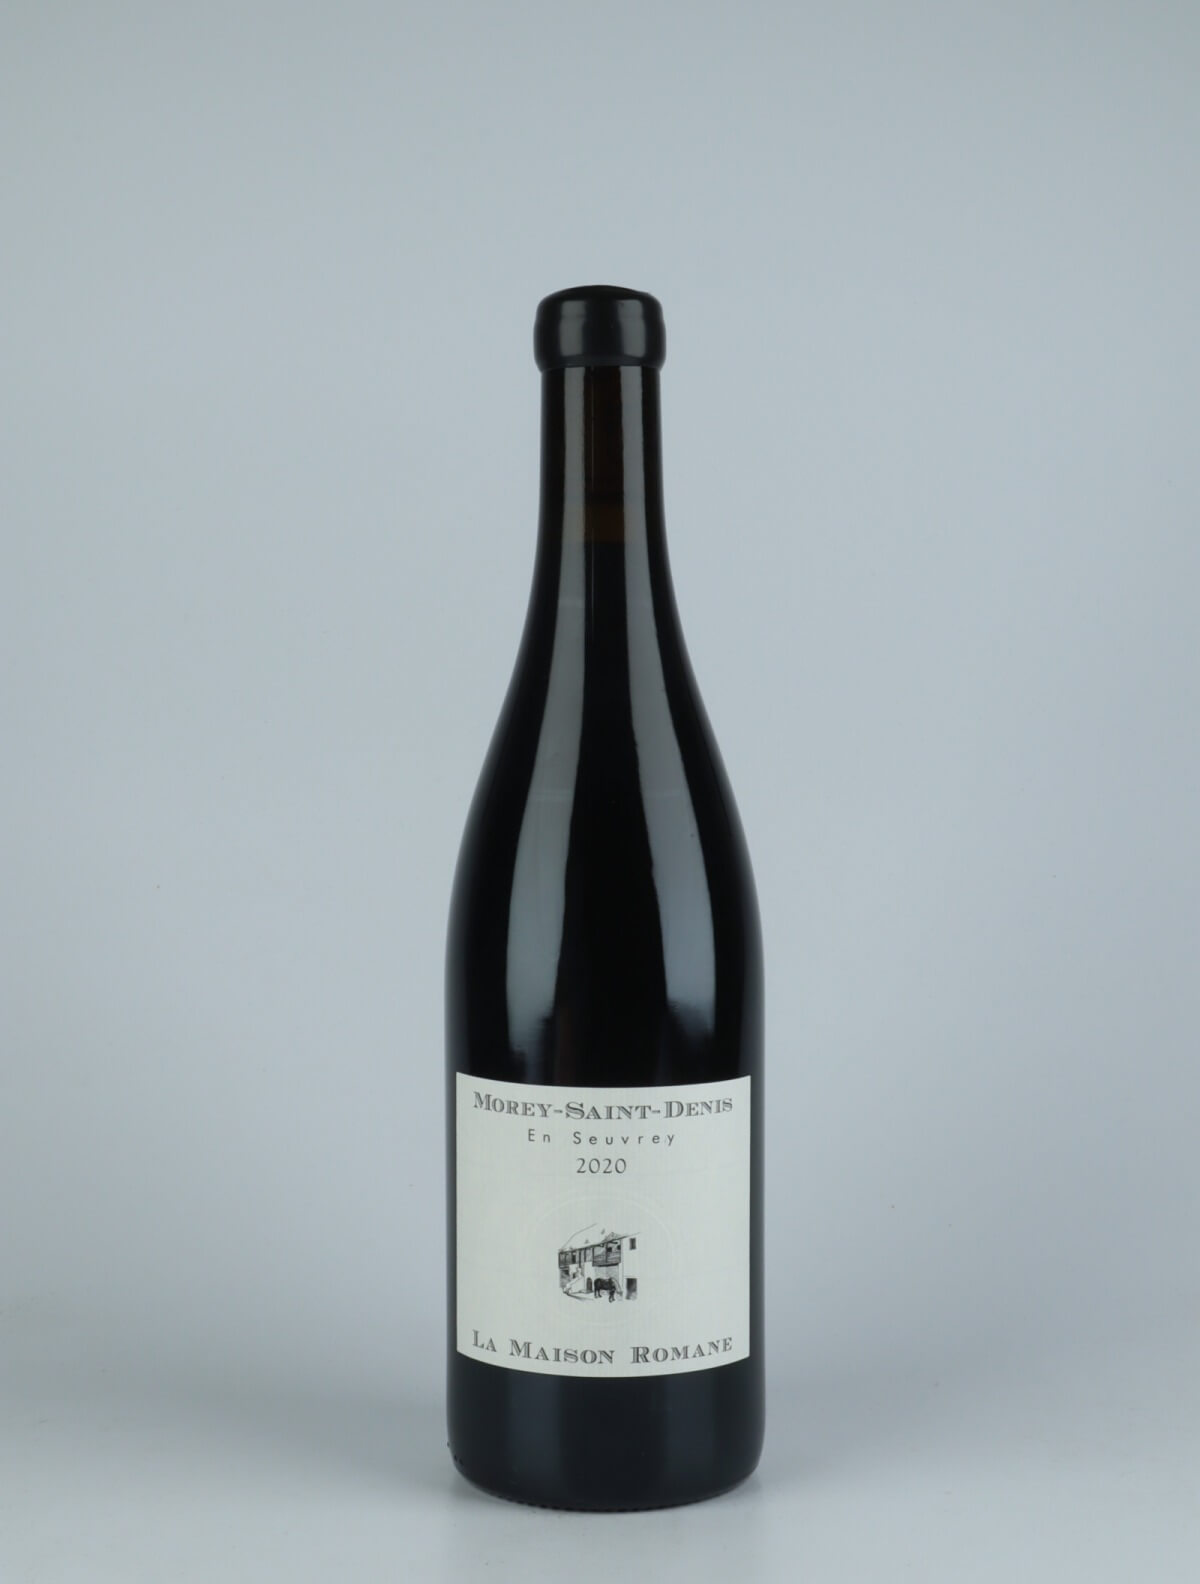 A bottle 2020 Morey Saint Denis - En Seuvrey Red wine from La Maison Romane, Burgundy in France